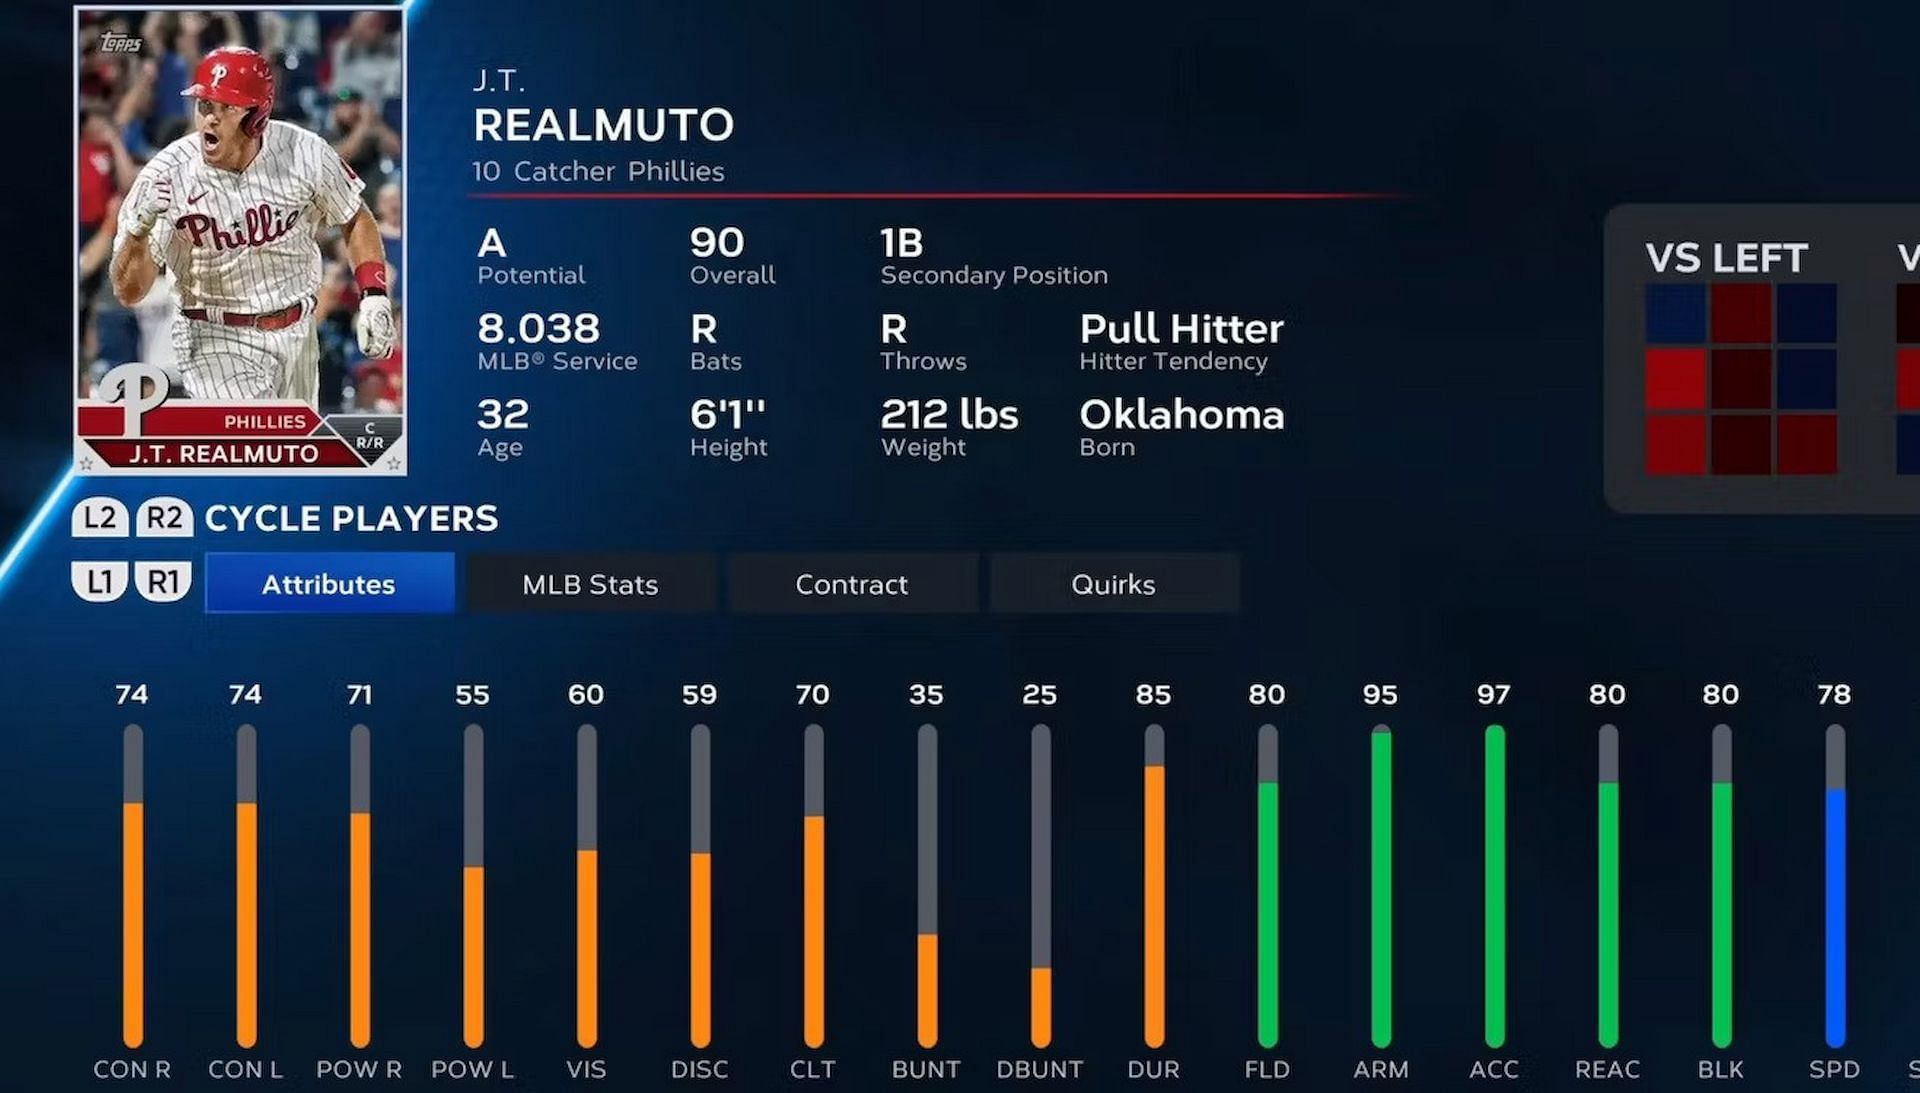 J.T. Realmuto has an overall rating of 90 (Image via San Diego Studio)